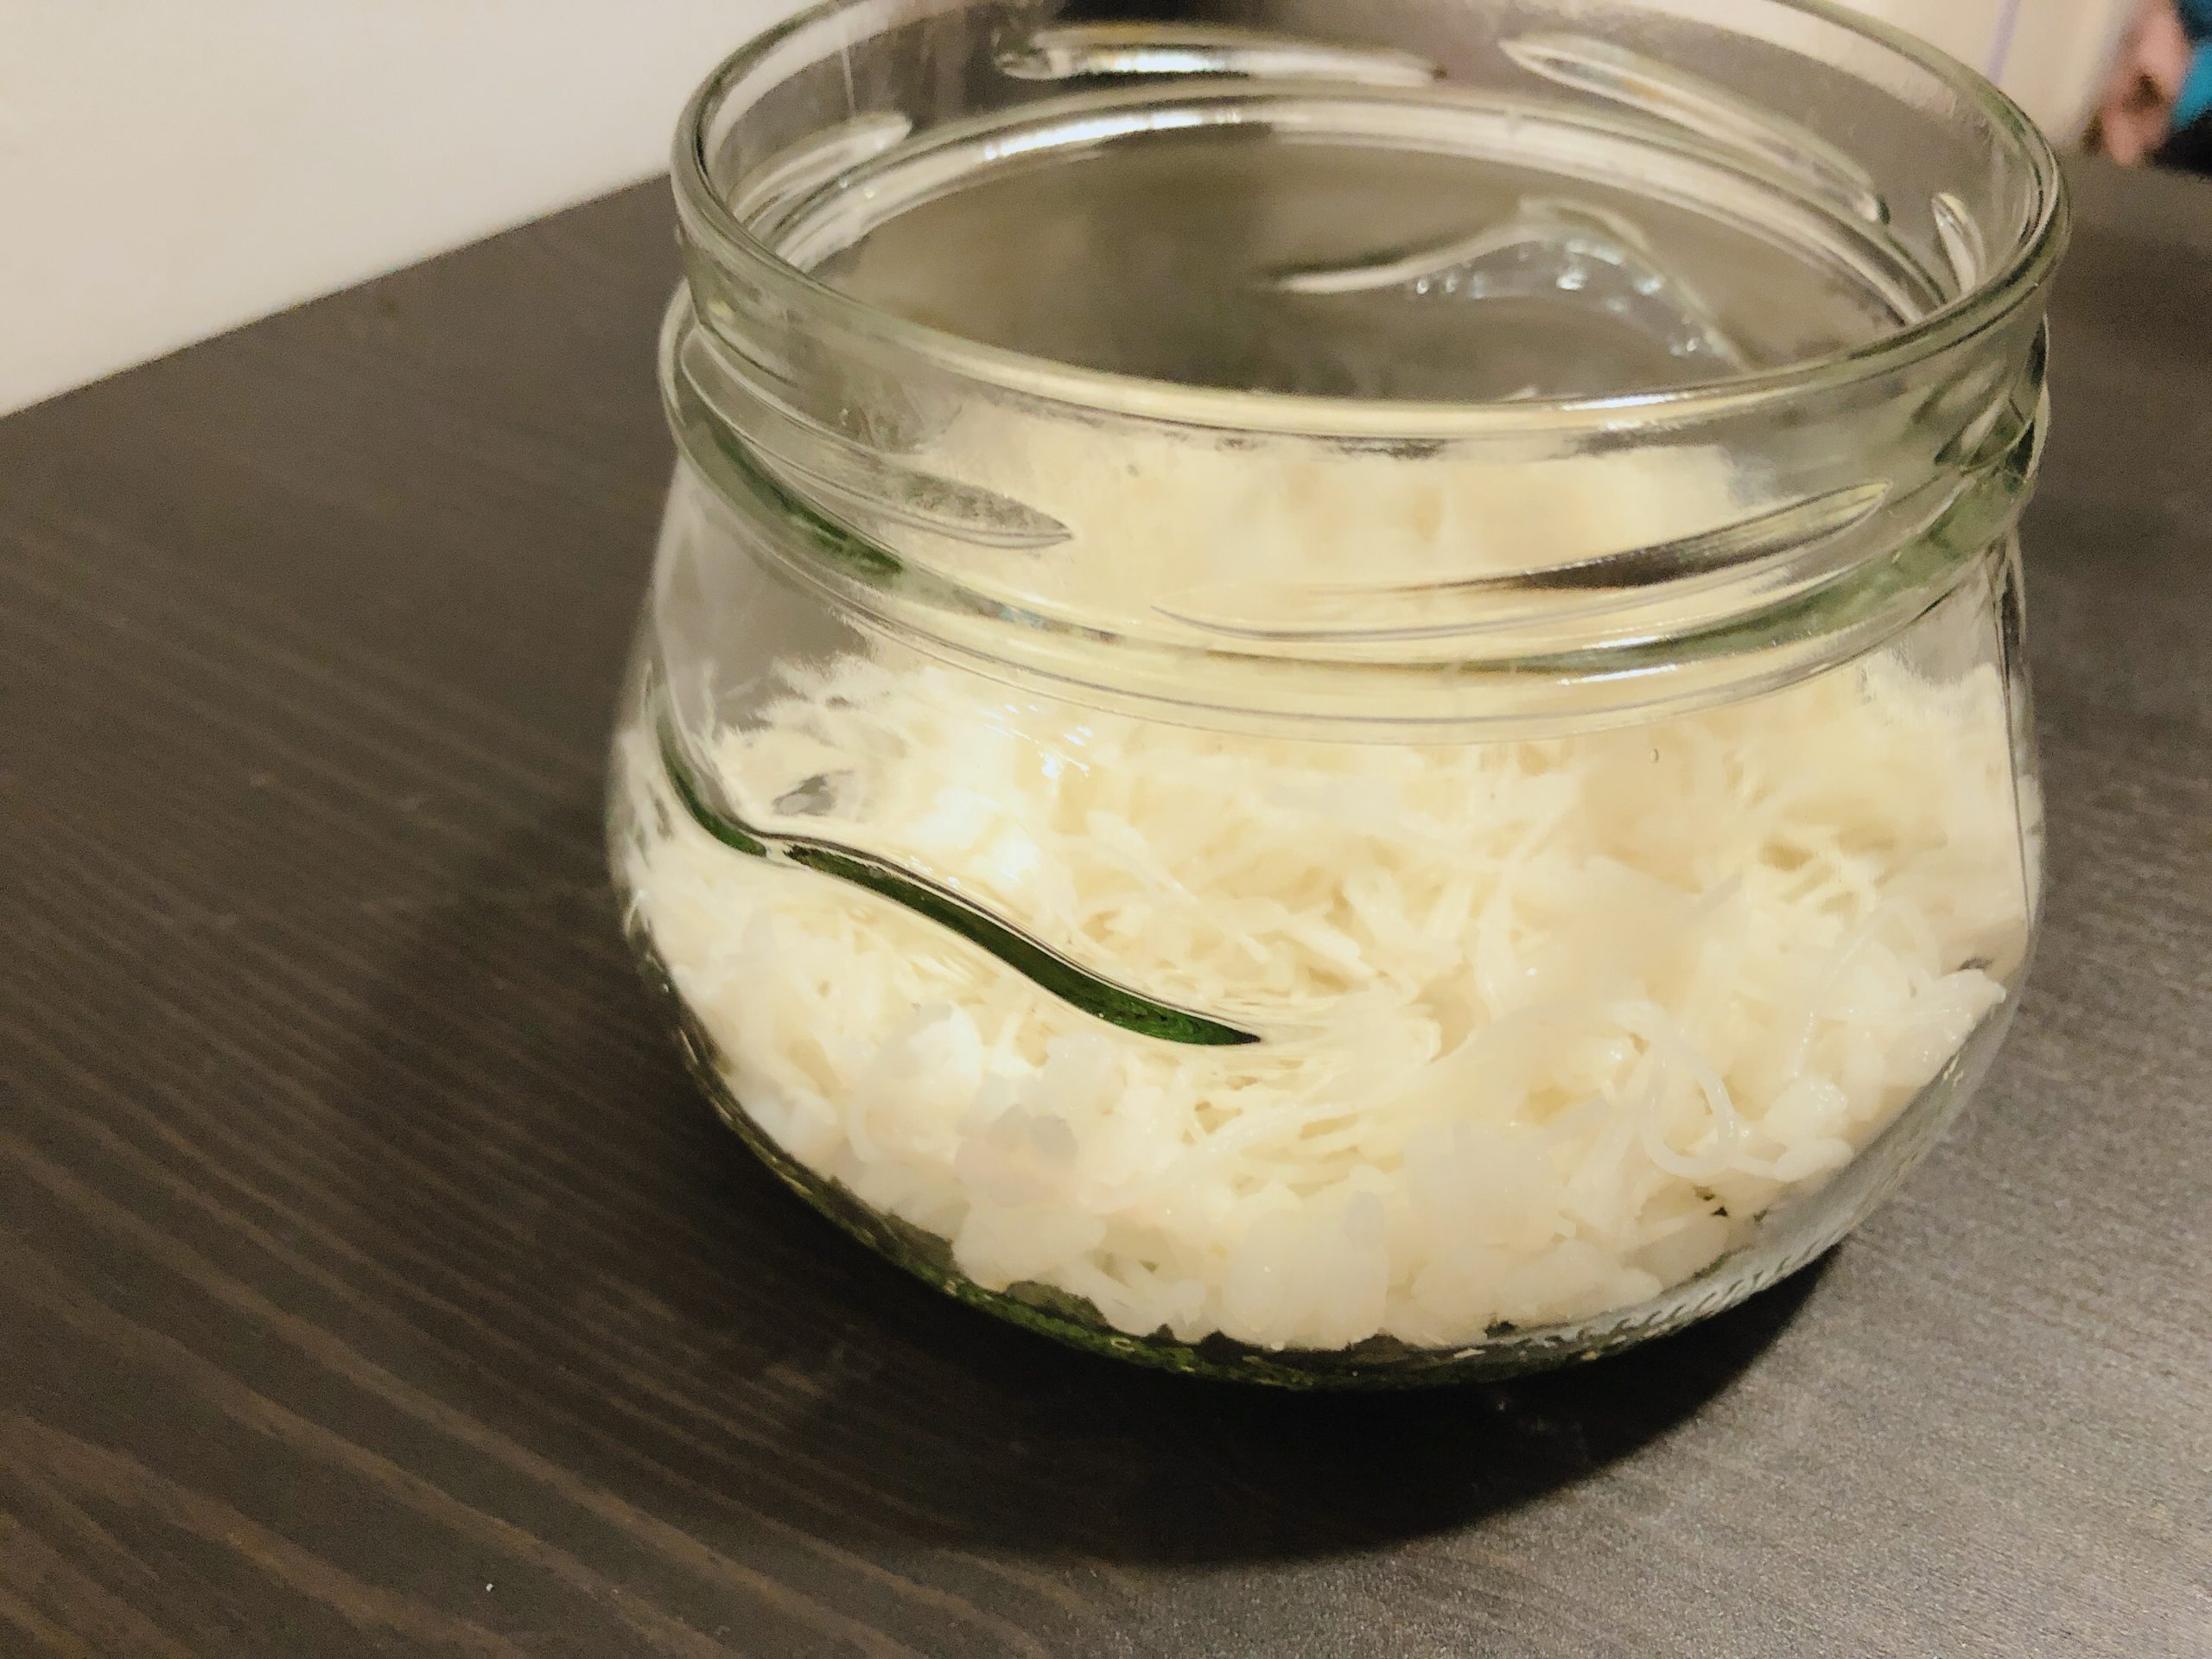 Lebanese Rice Pilaf